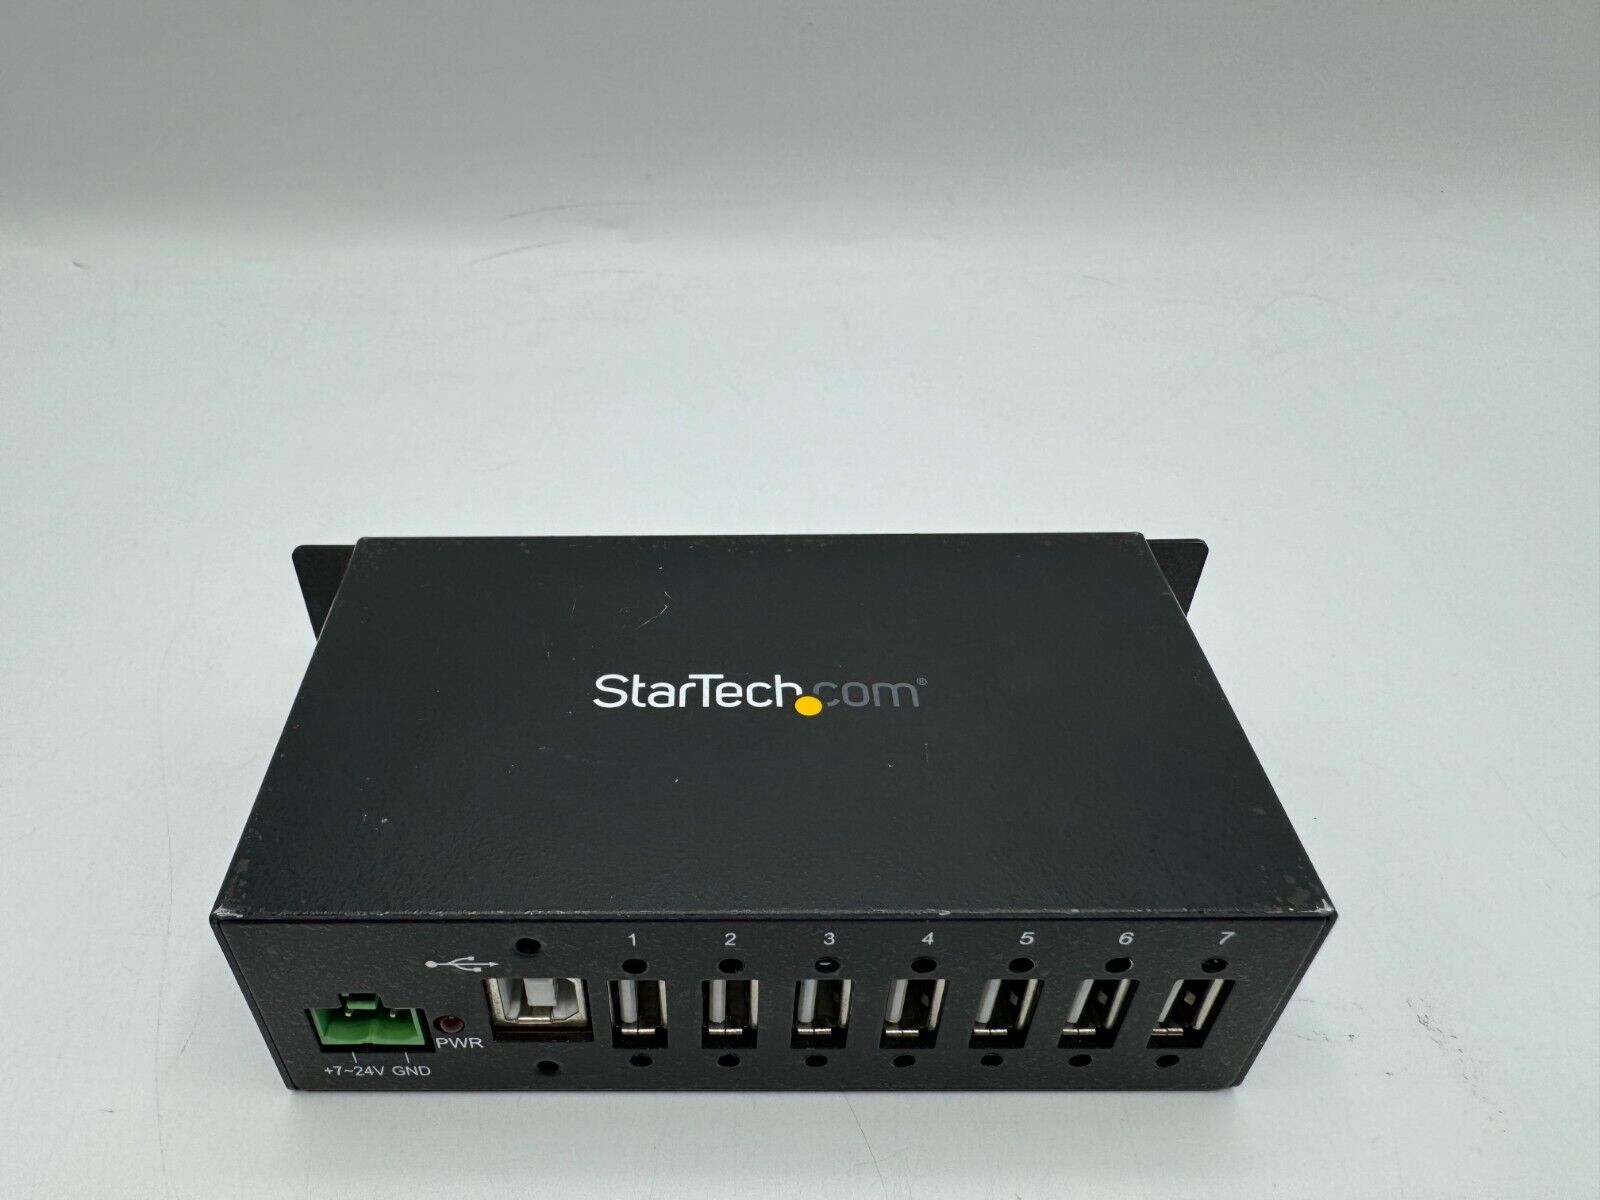 Startech ST7200USBM 7 Port USB 2.0 ESD/Surge Metal Industrial Hub